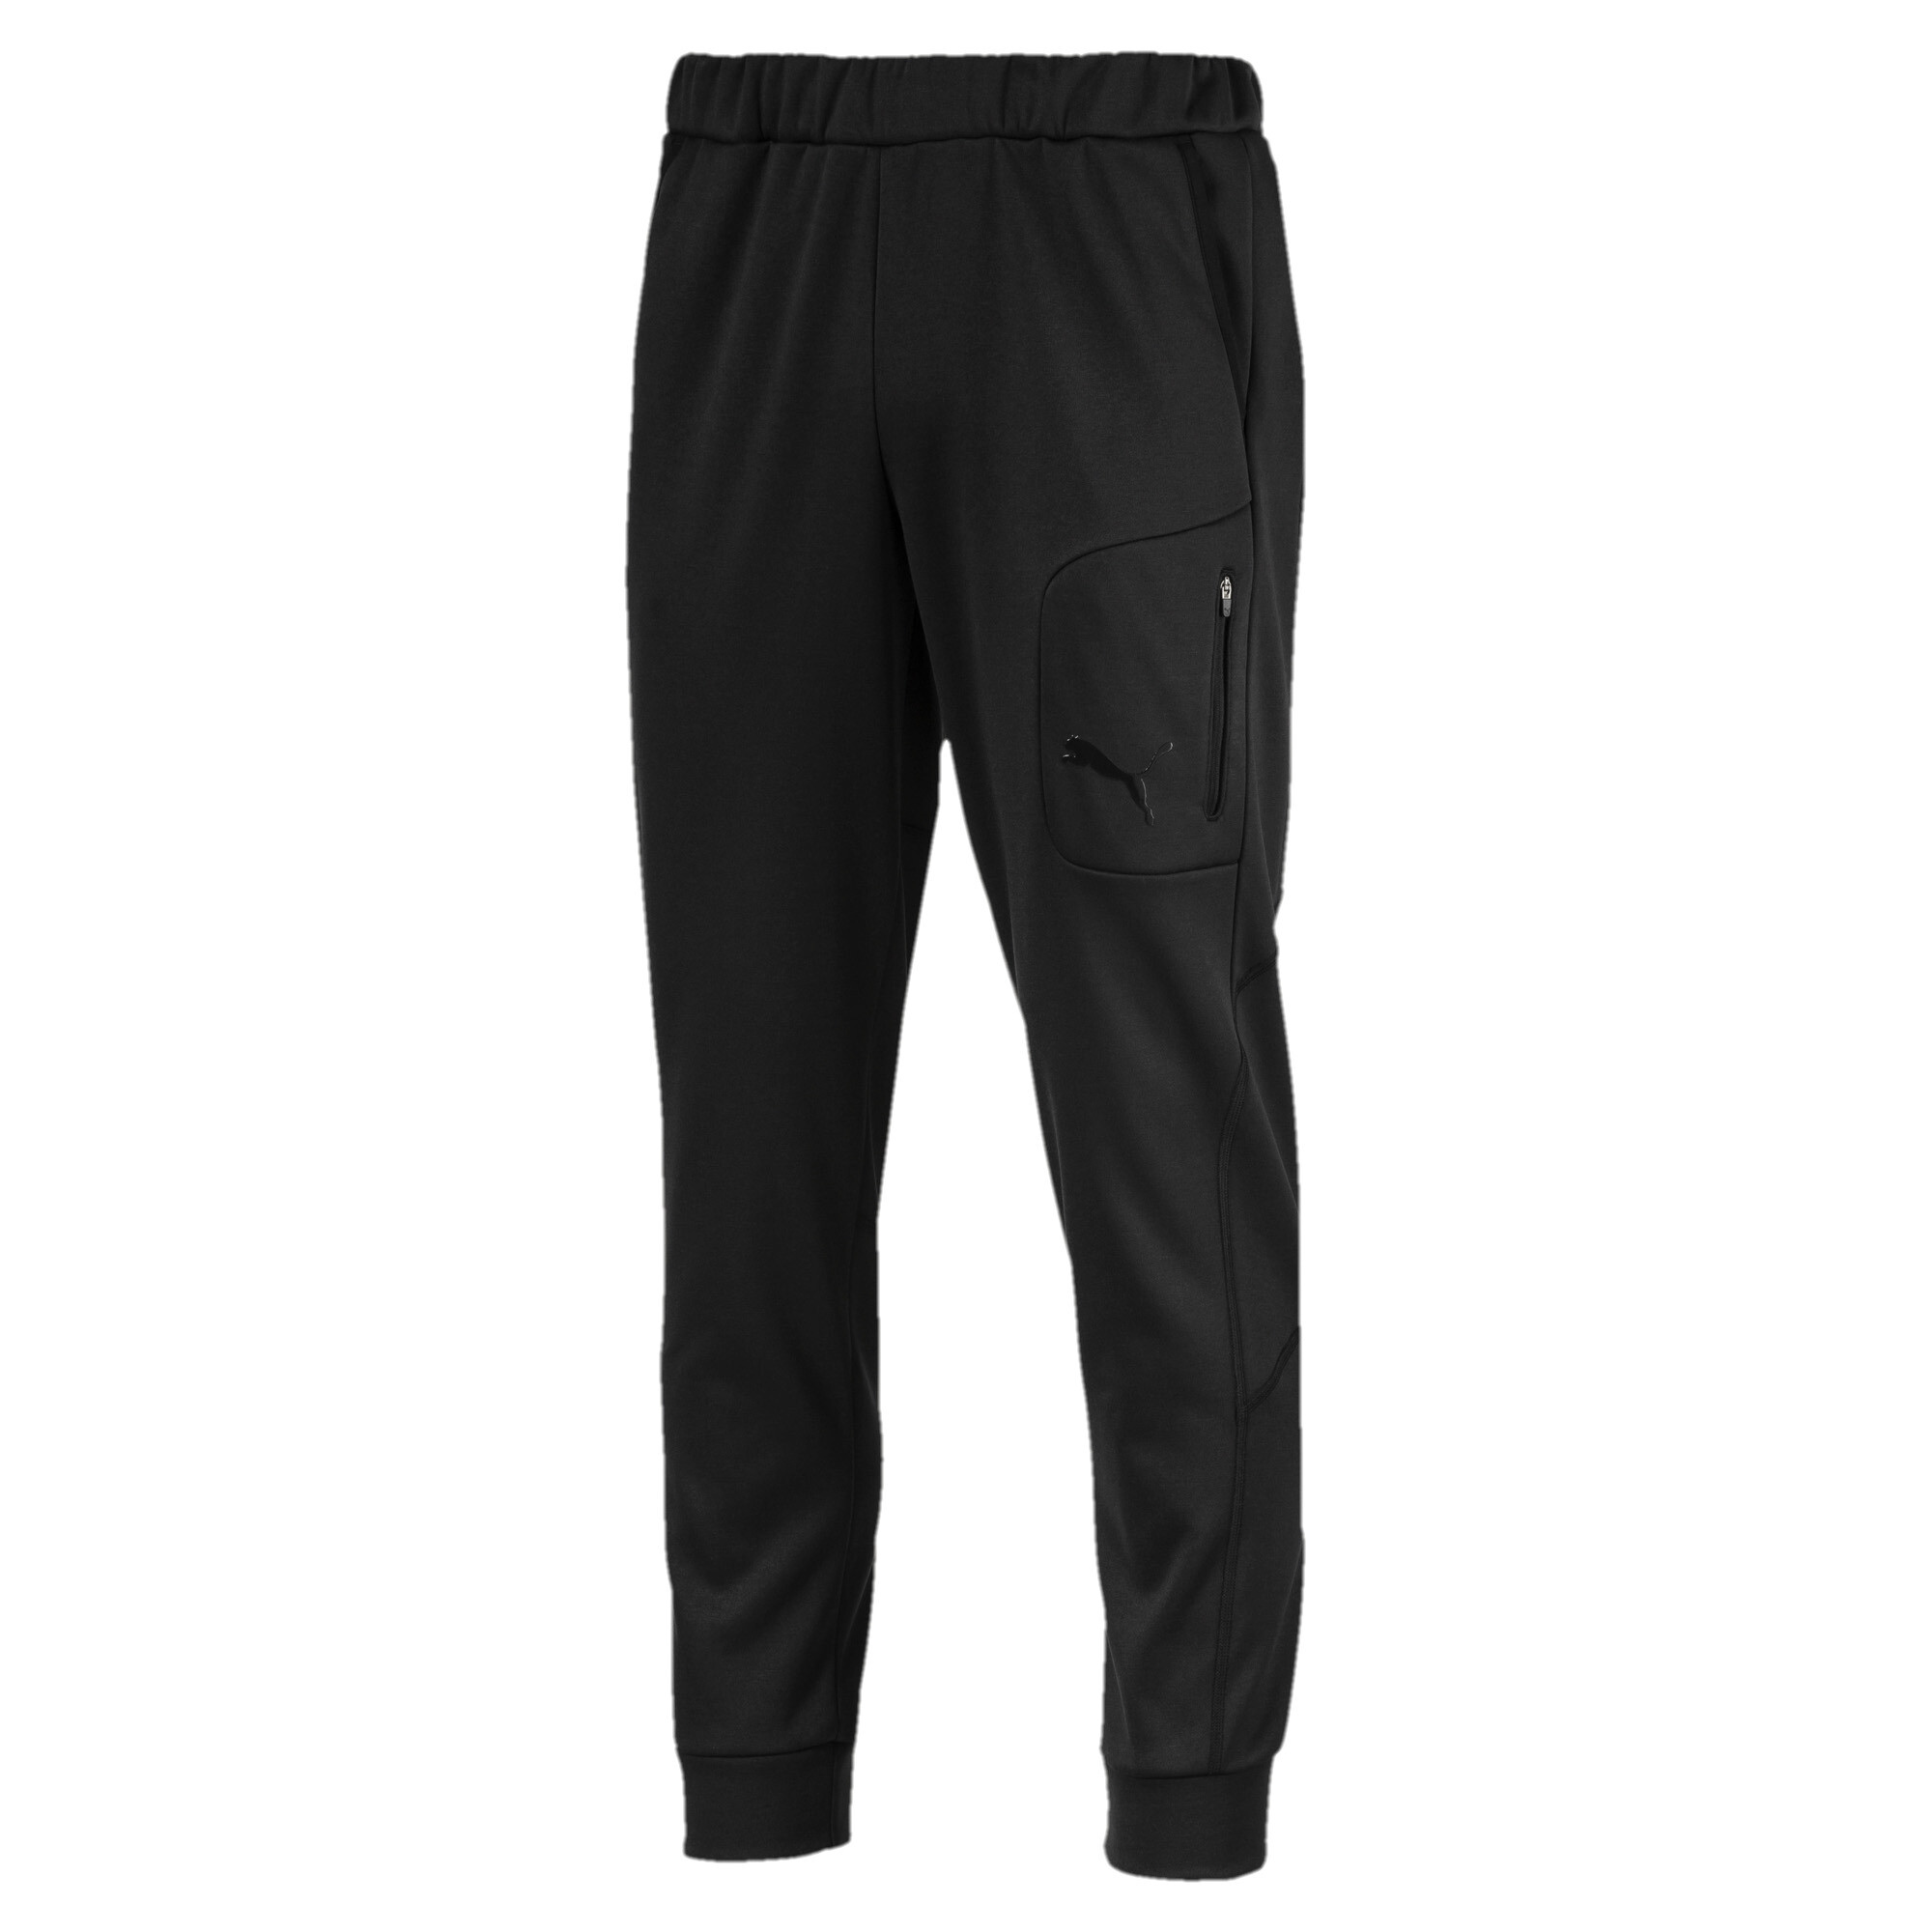 PUMA Evostripe Men's Warm Pants Men Knitted Pants Basics | eBay